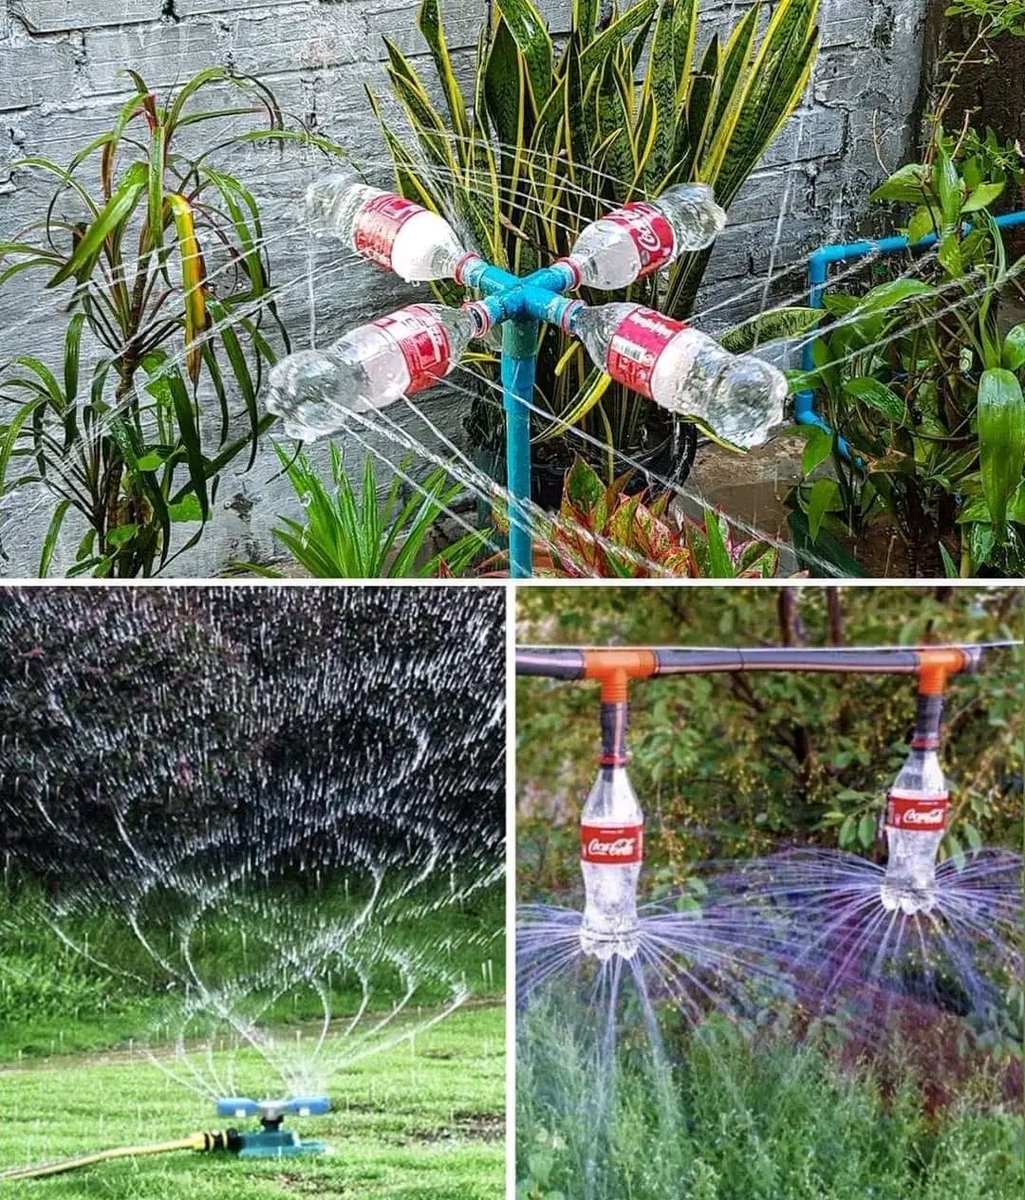 Some innovative irrigation ideas ❤️